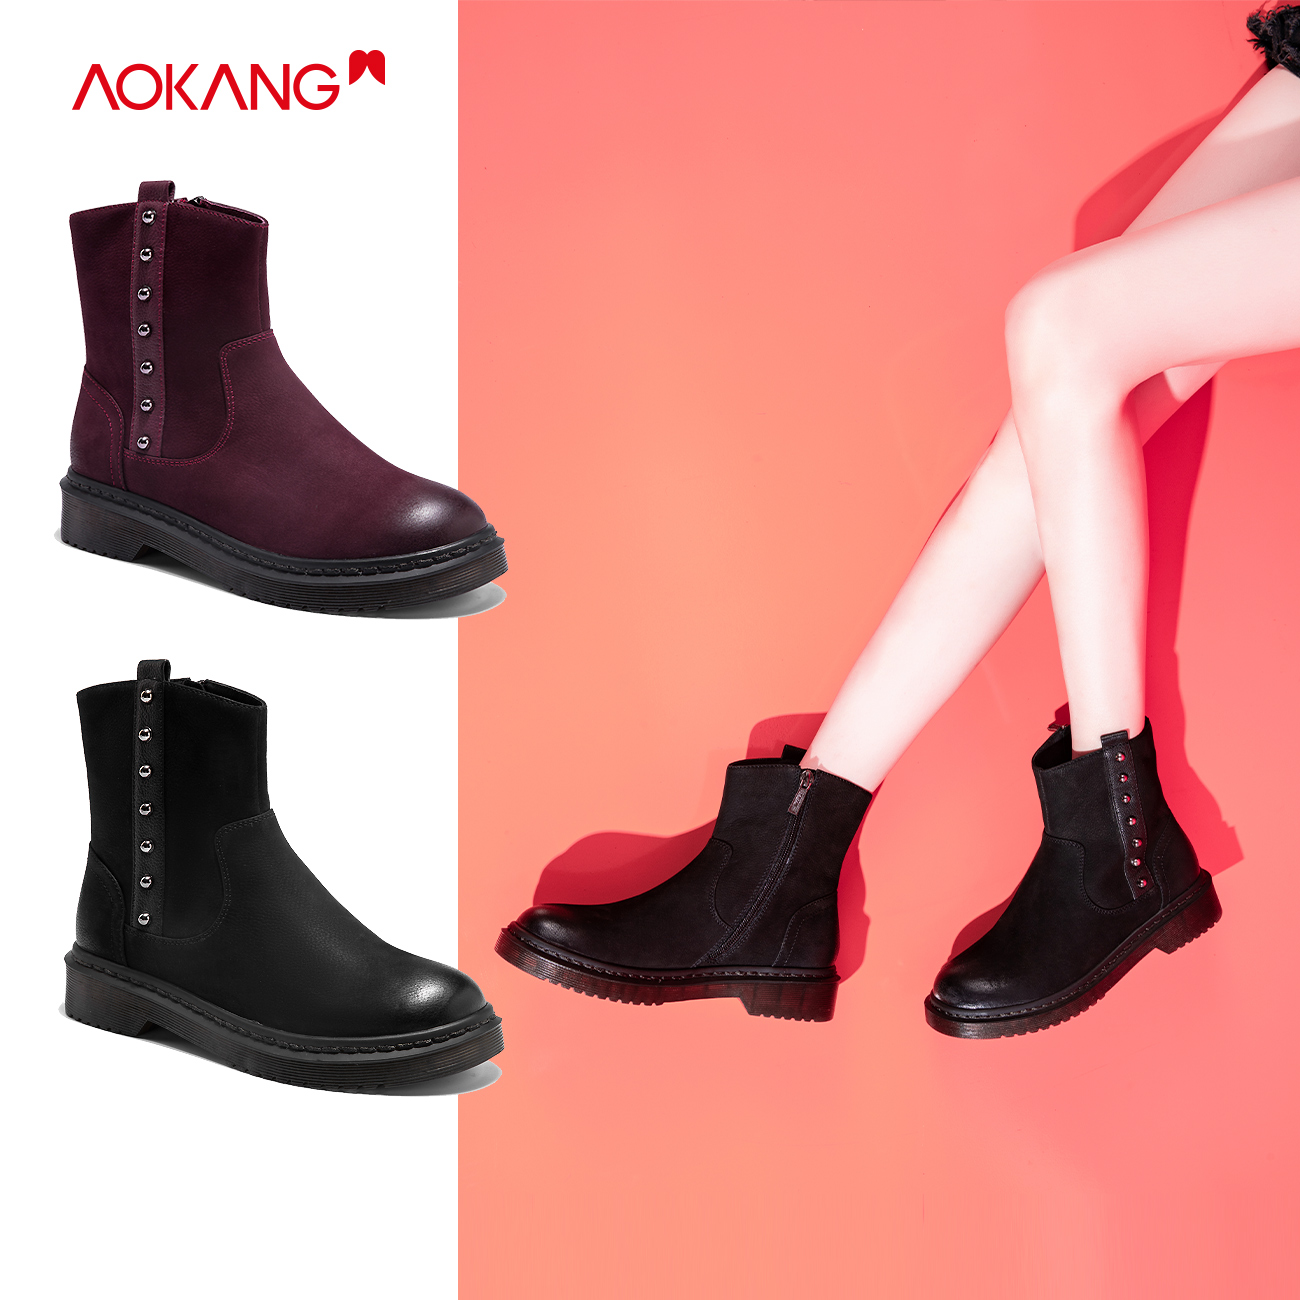 Aokang women's shoes rivet flat heel young round head women's boots Korean version leather fashion boots